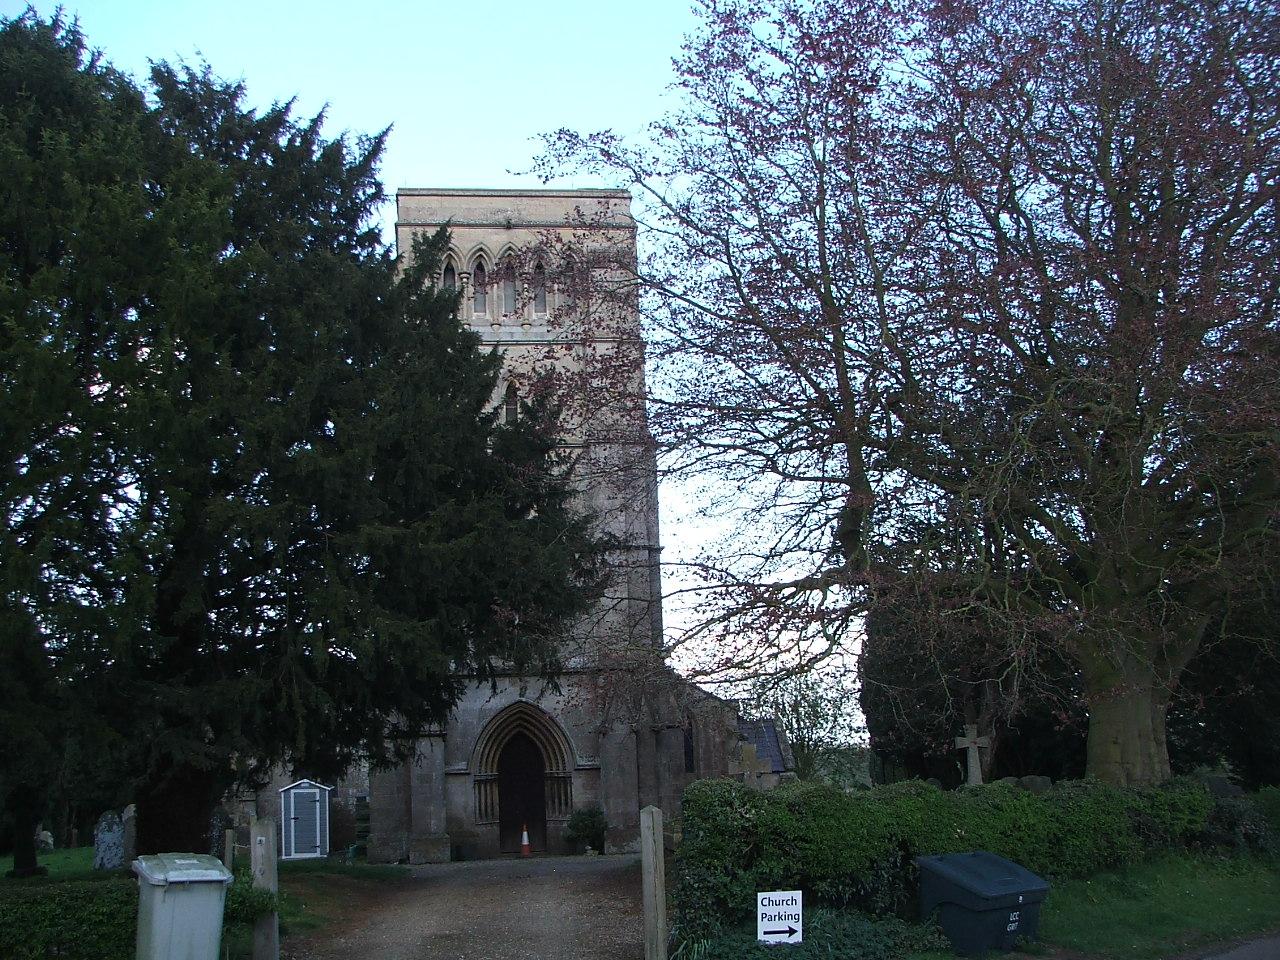 St Helen’s Church is on Church Lane in East Keal